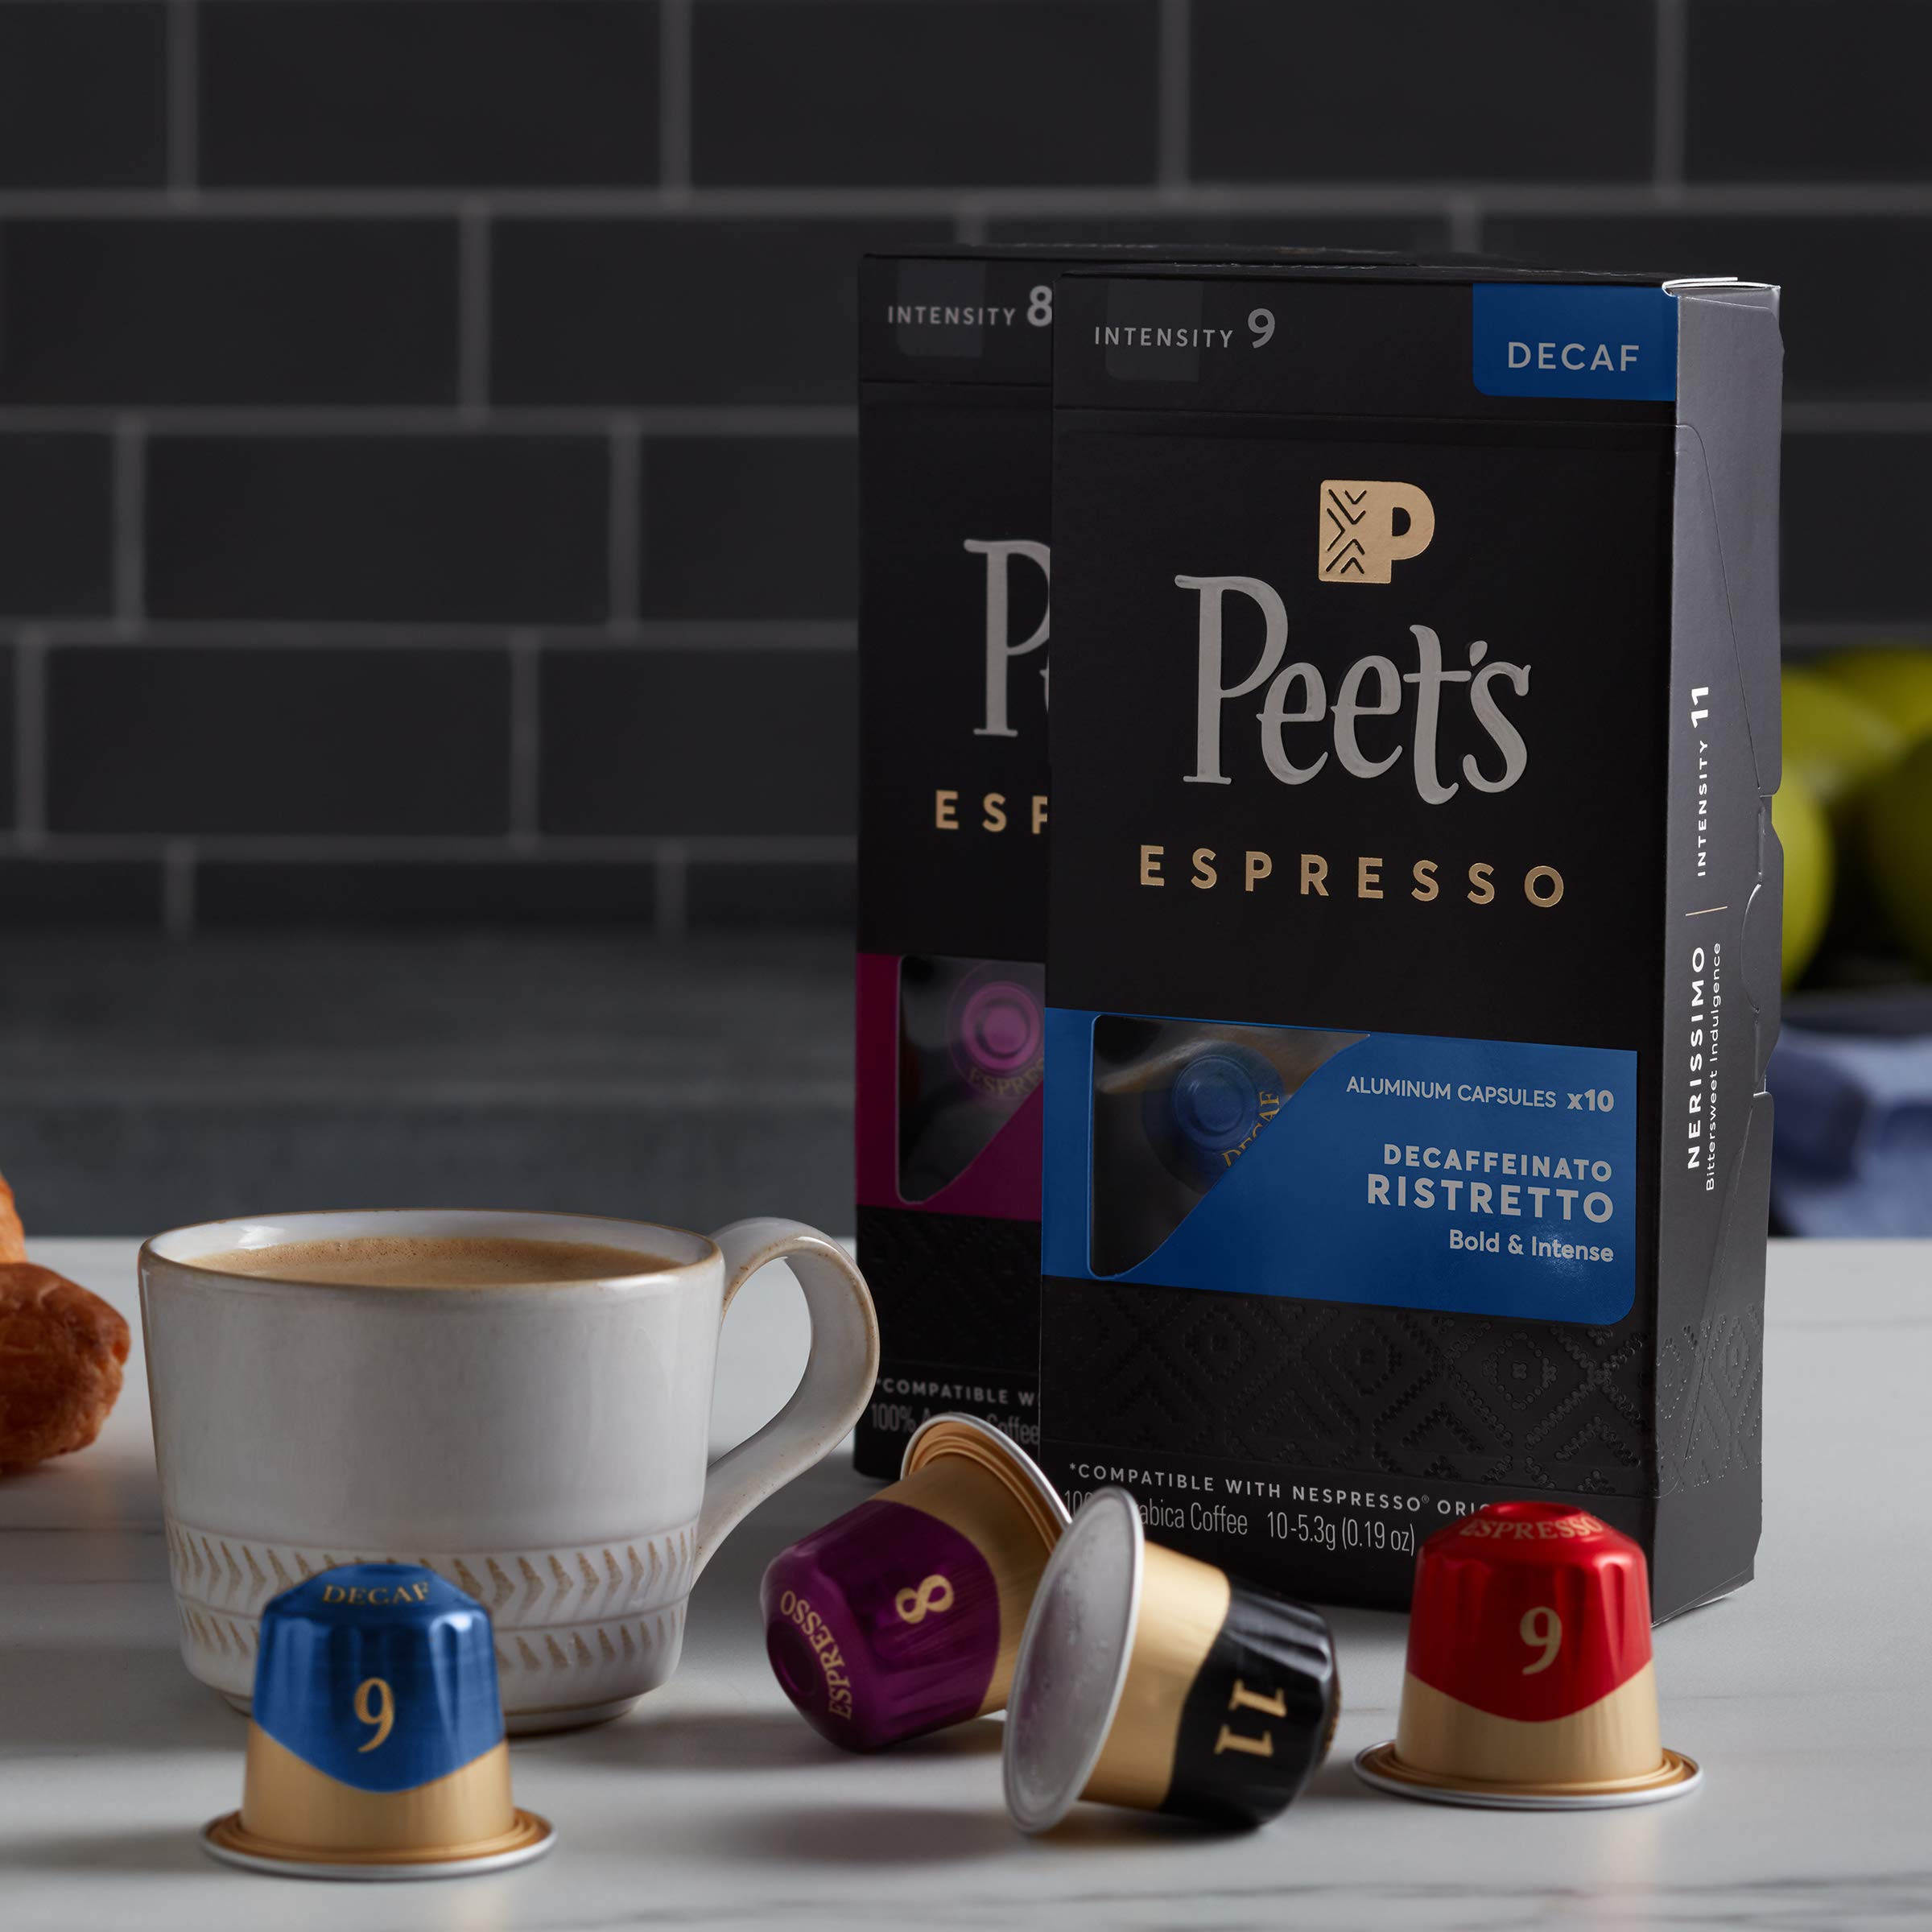 Peet's Coffee Espresso Capsules Decaffeinato Ristretto Intensity 9, Single Cup Coffee Pods, Compatible With Nespresso Original Brewers, 10Count